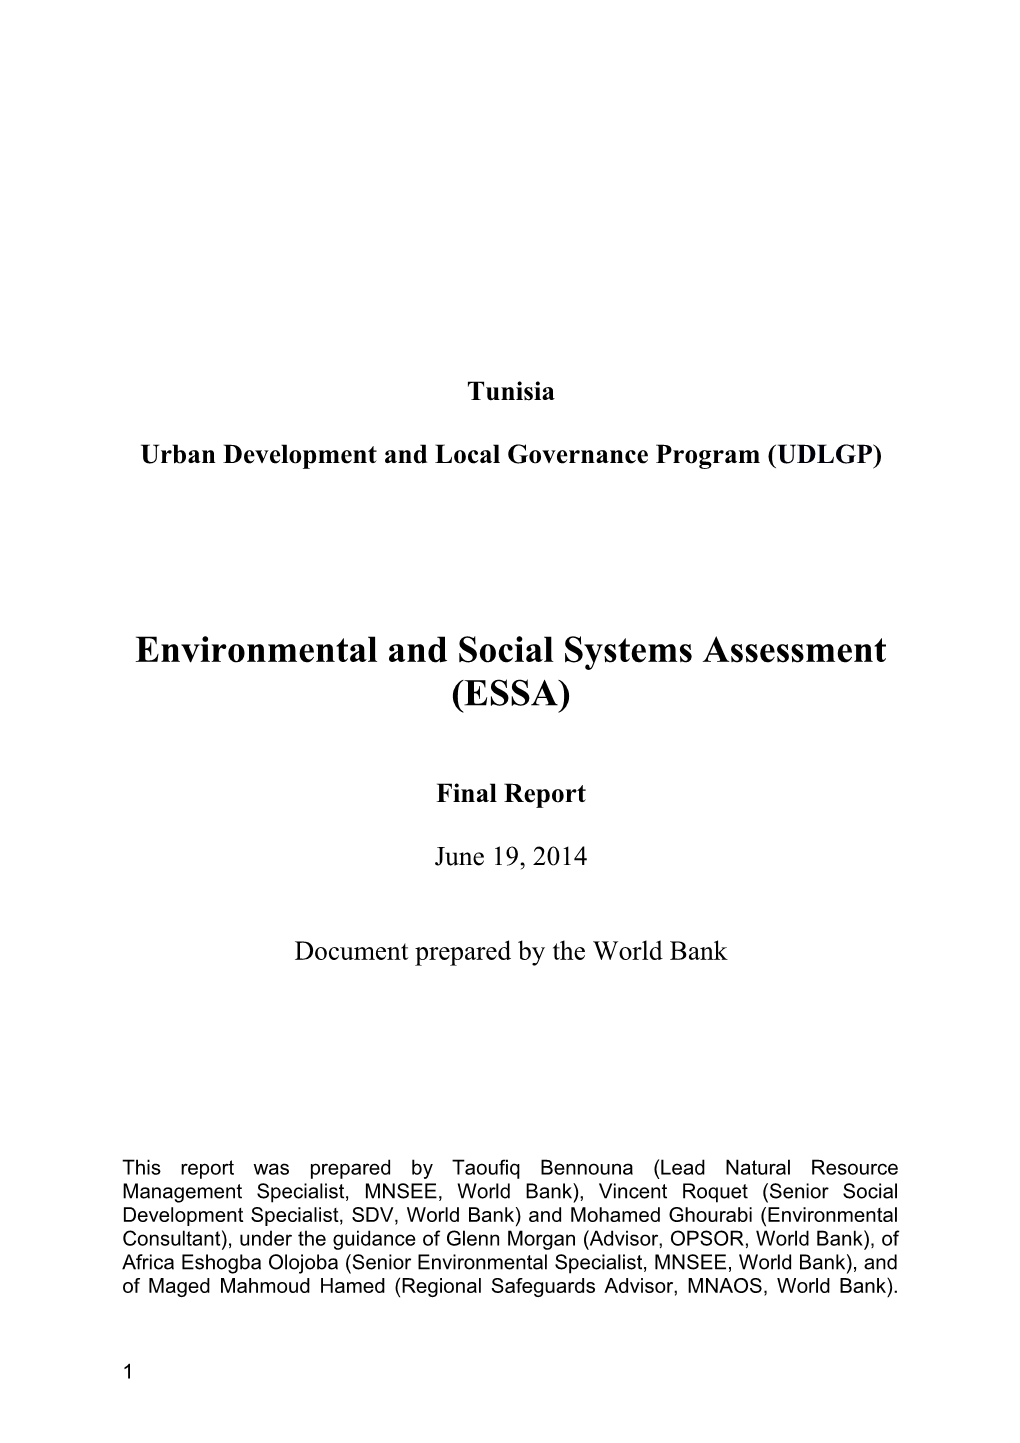 Urban Development and Local Governance Program (UDLGP)